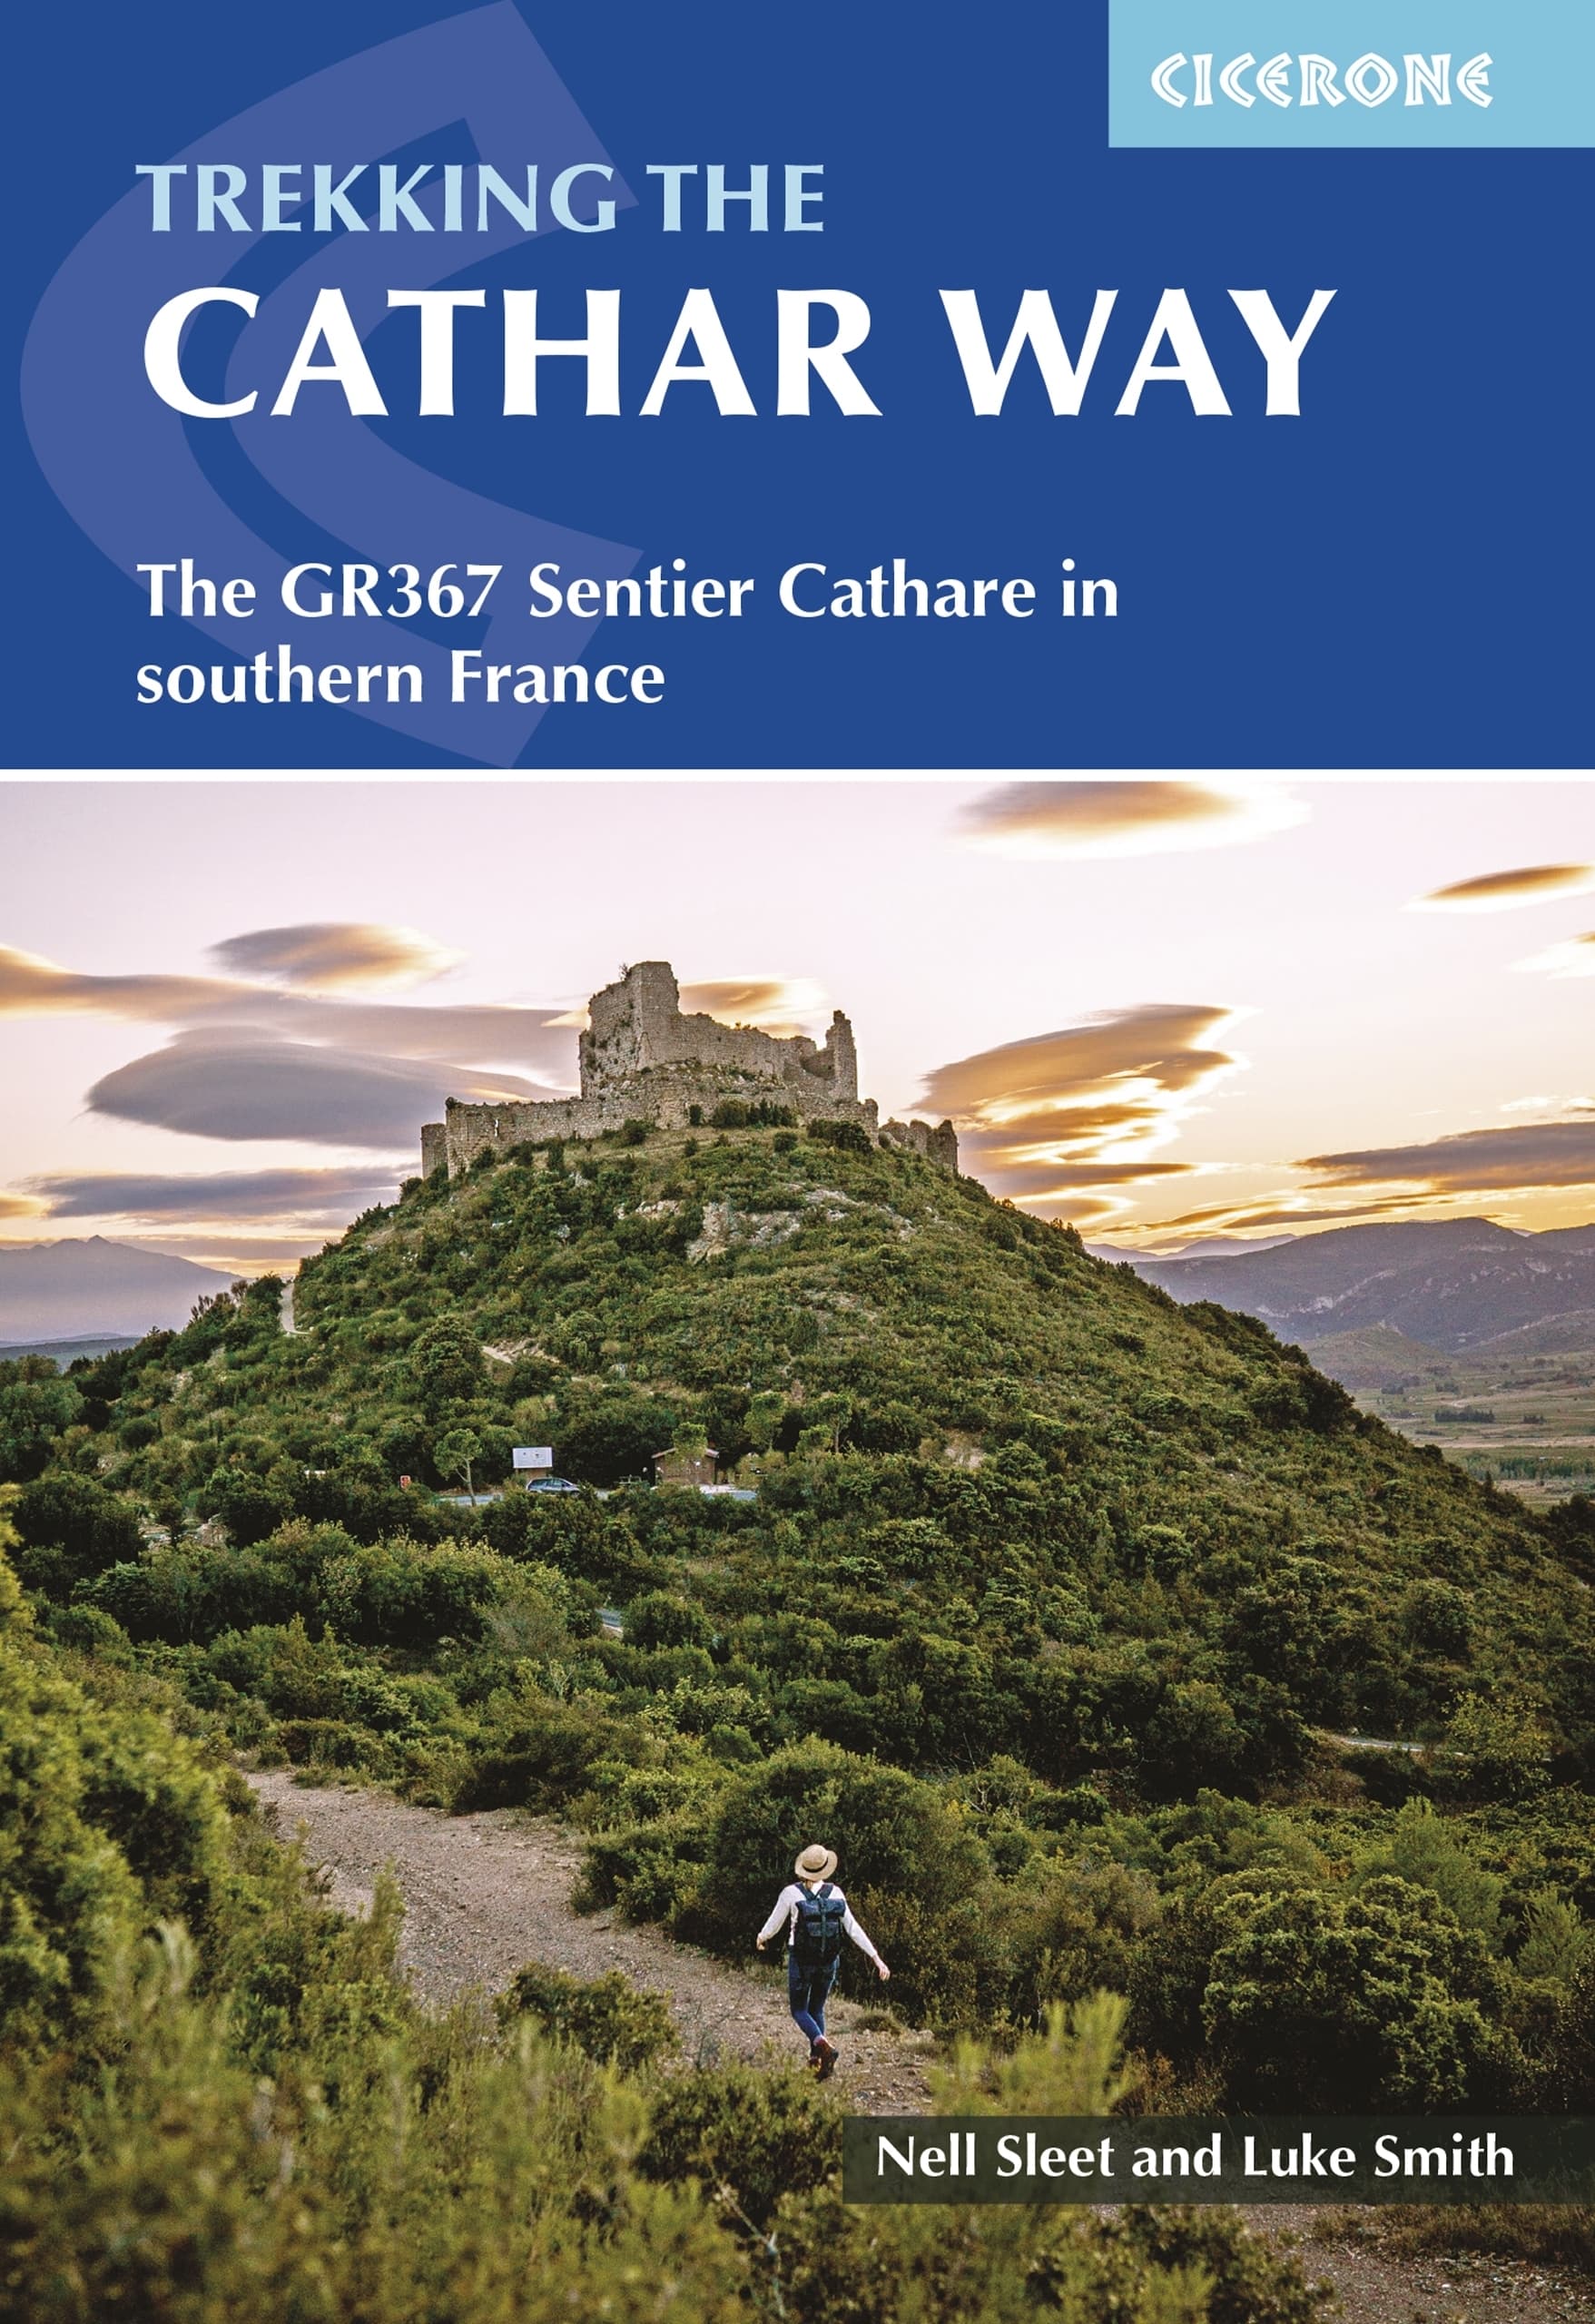 Online bestellen: Wandelgids The Cathar Way | Cicerone